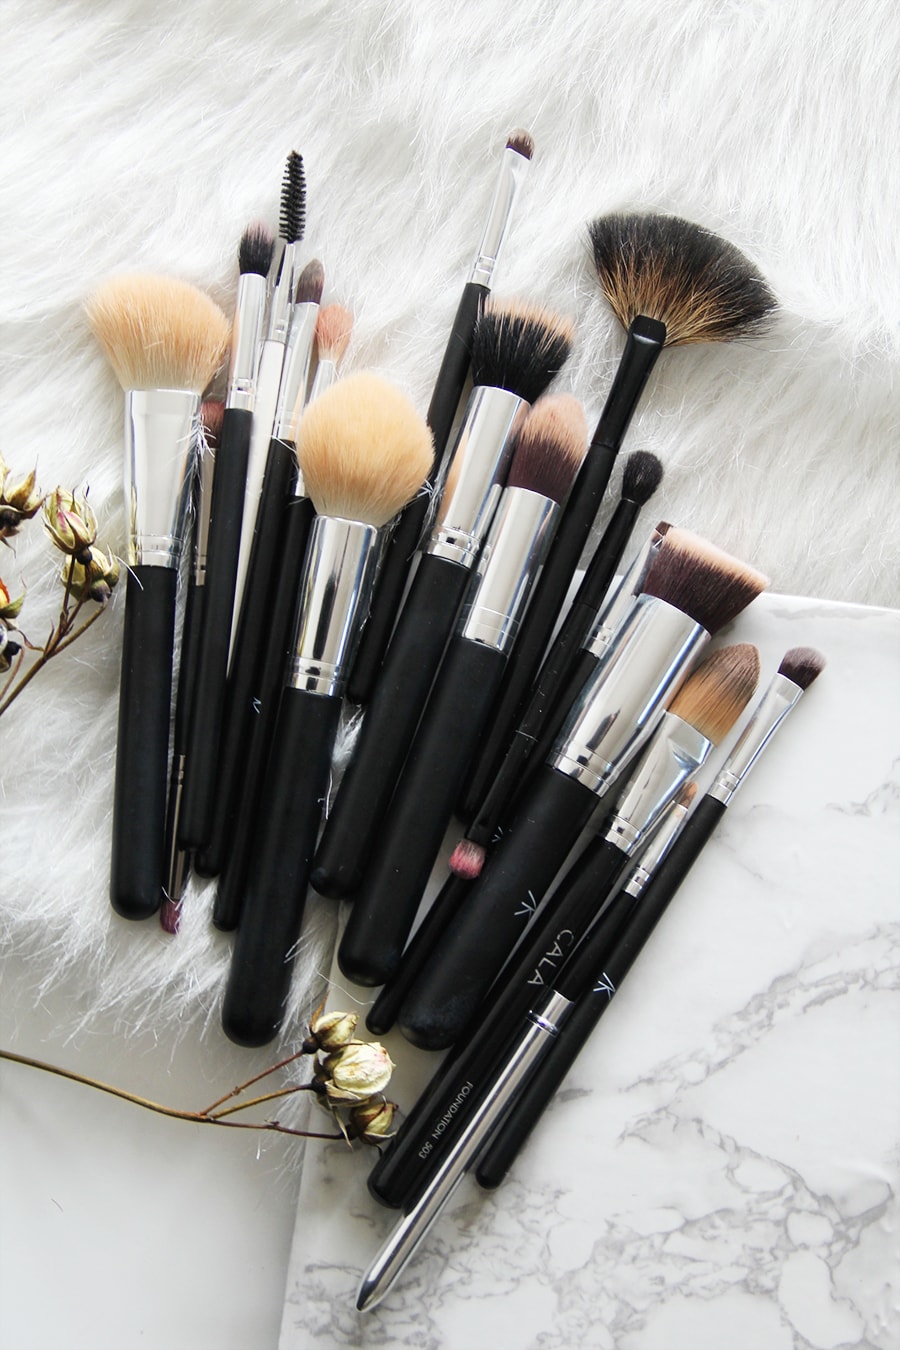 Makeup brushes 101 - Cómo usar brochas para maquillaje | Golden Strokes